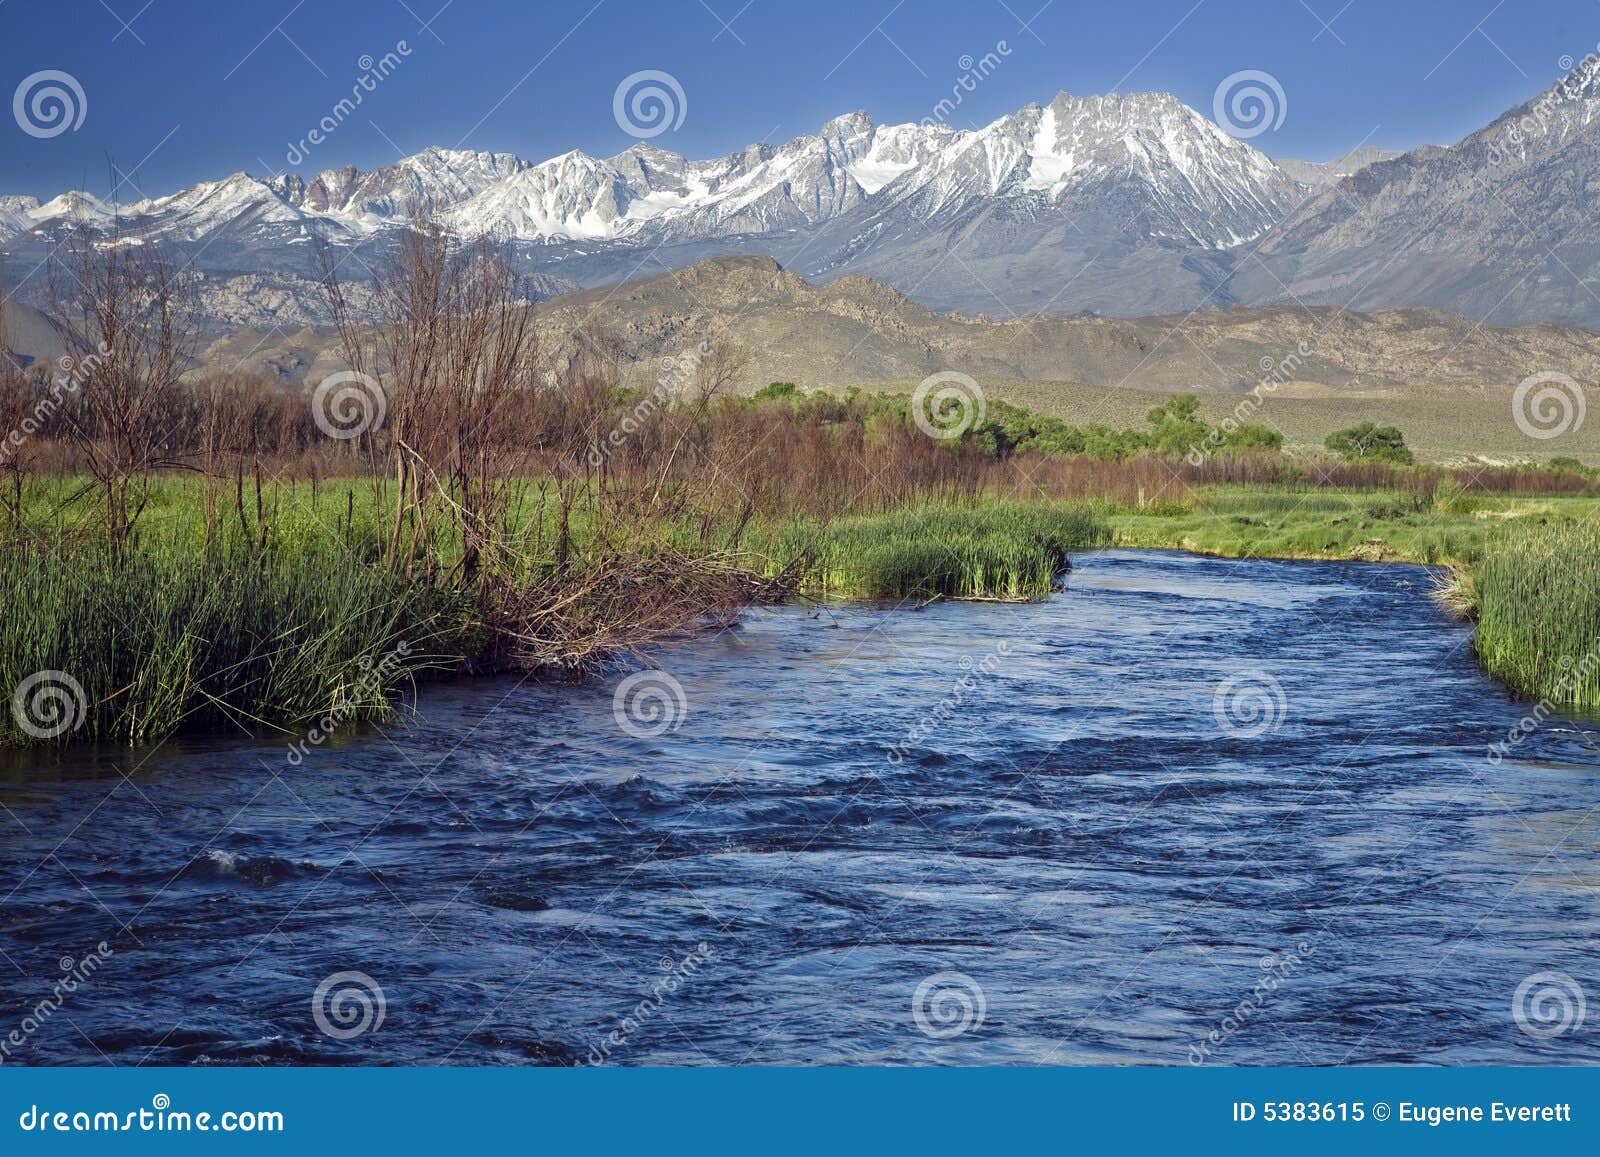 owens river sierra